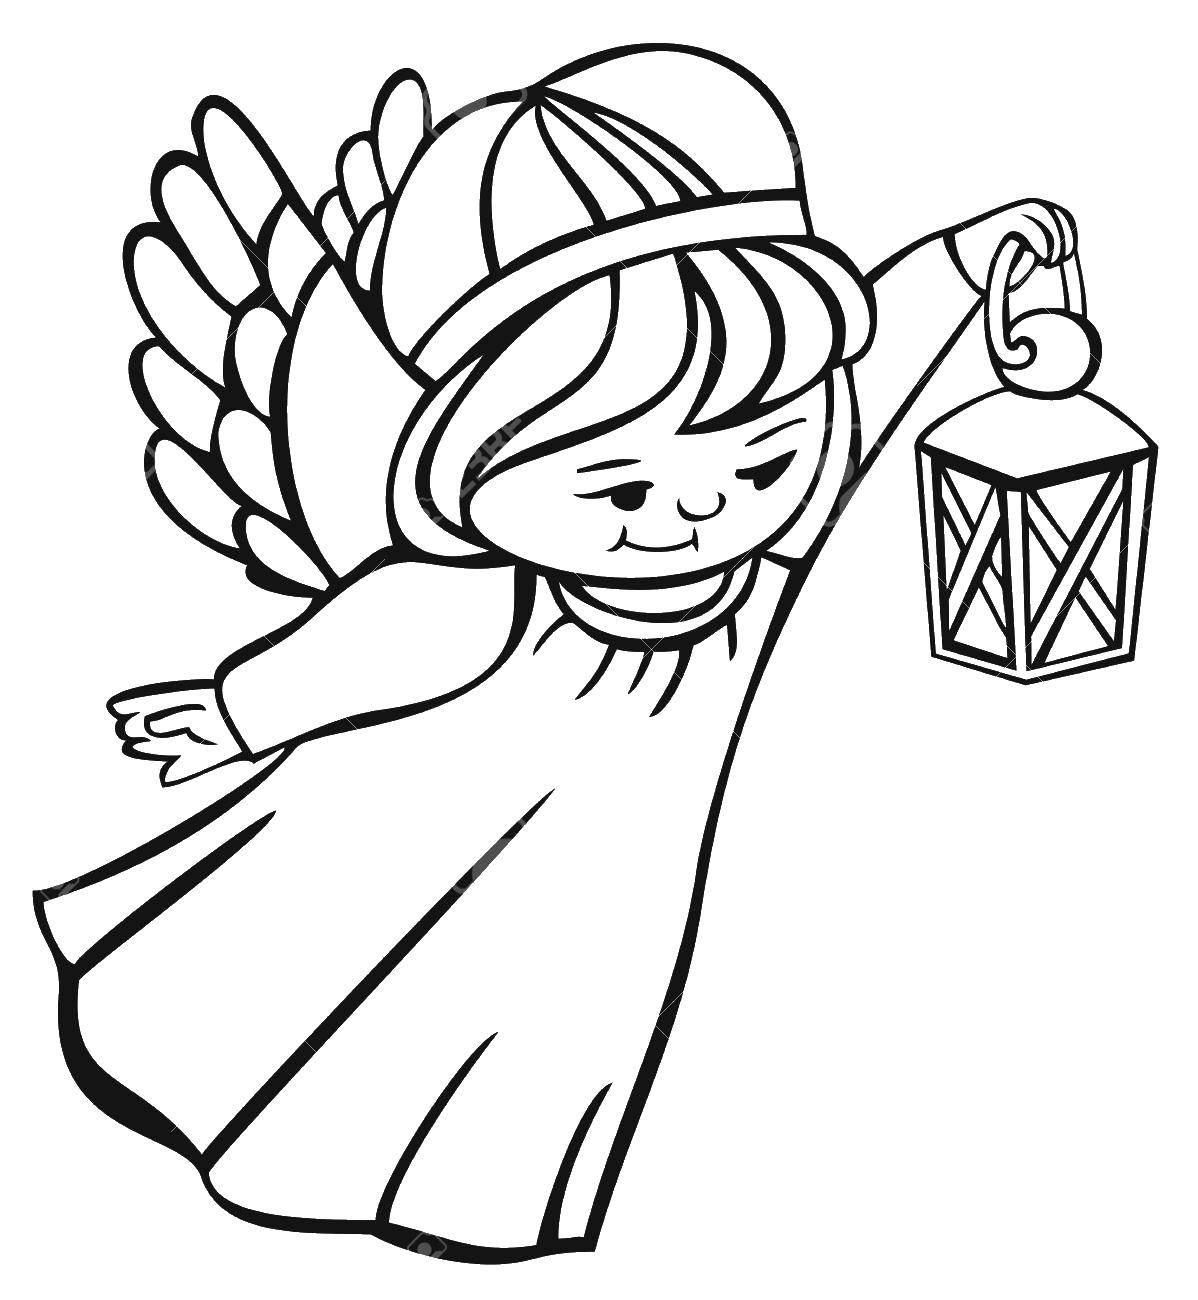 Coloring Fairy with lantern. Category fairies. Tags:  fairies, flashlight.